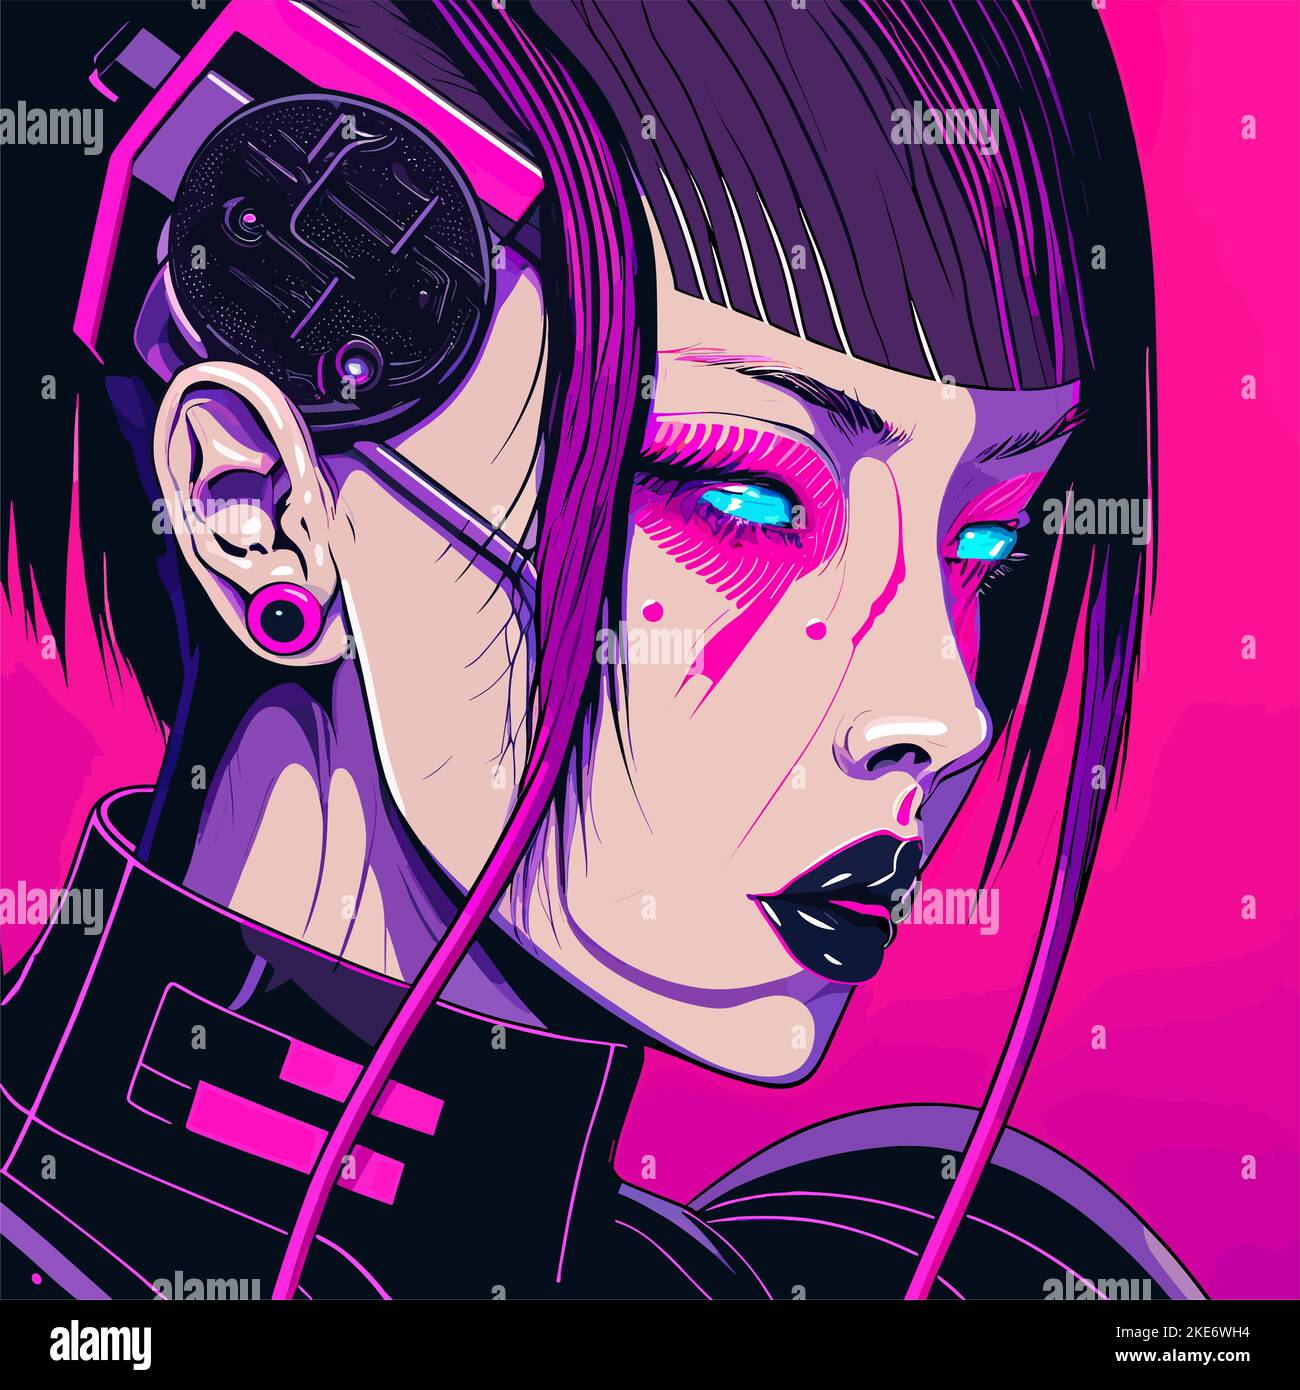 Wallpaper girl, art, beautiful, cyberpunk girl for mobile and